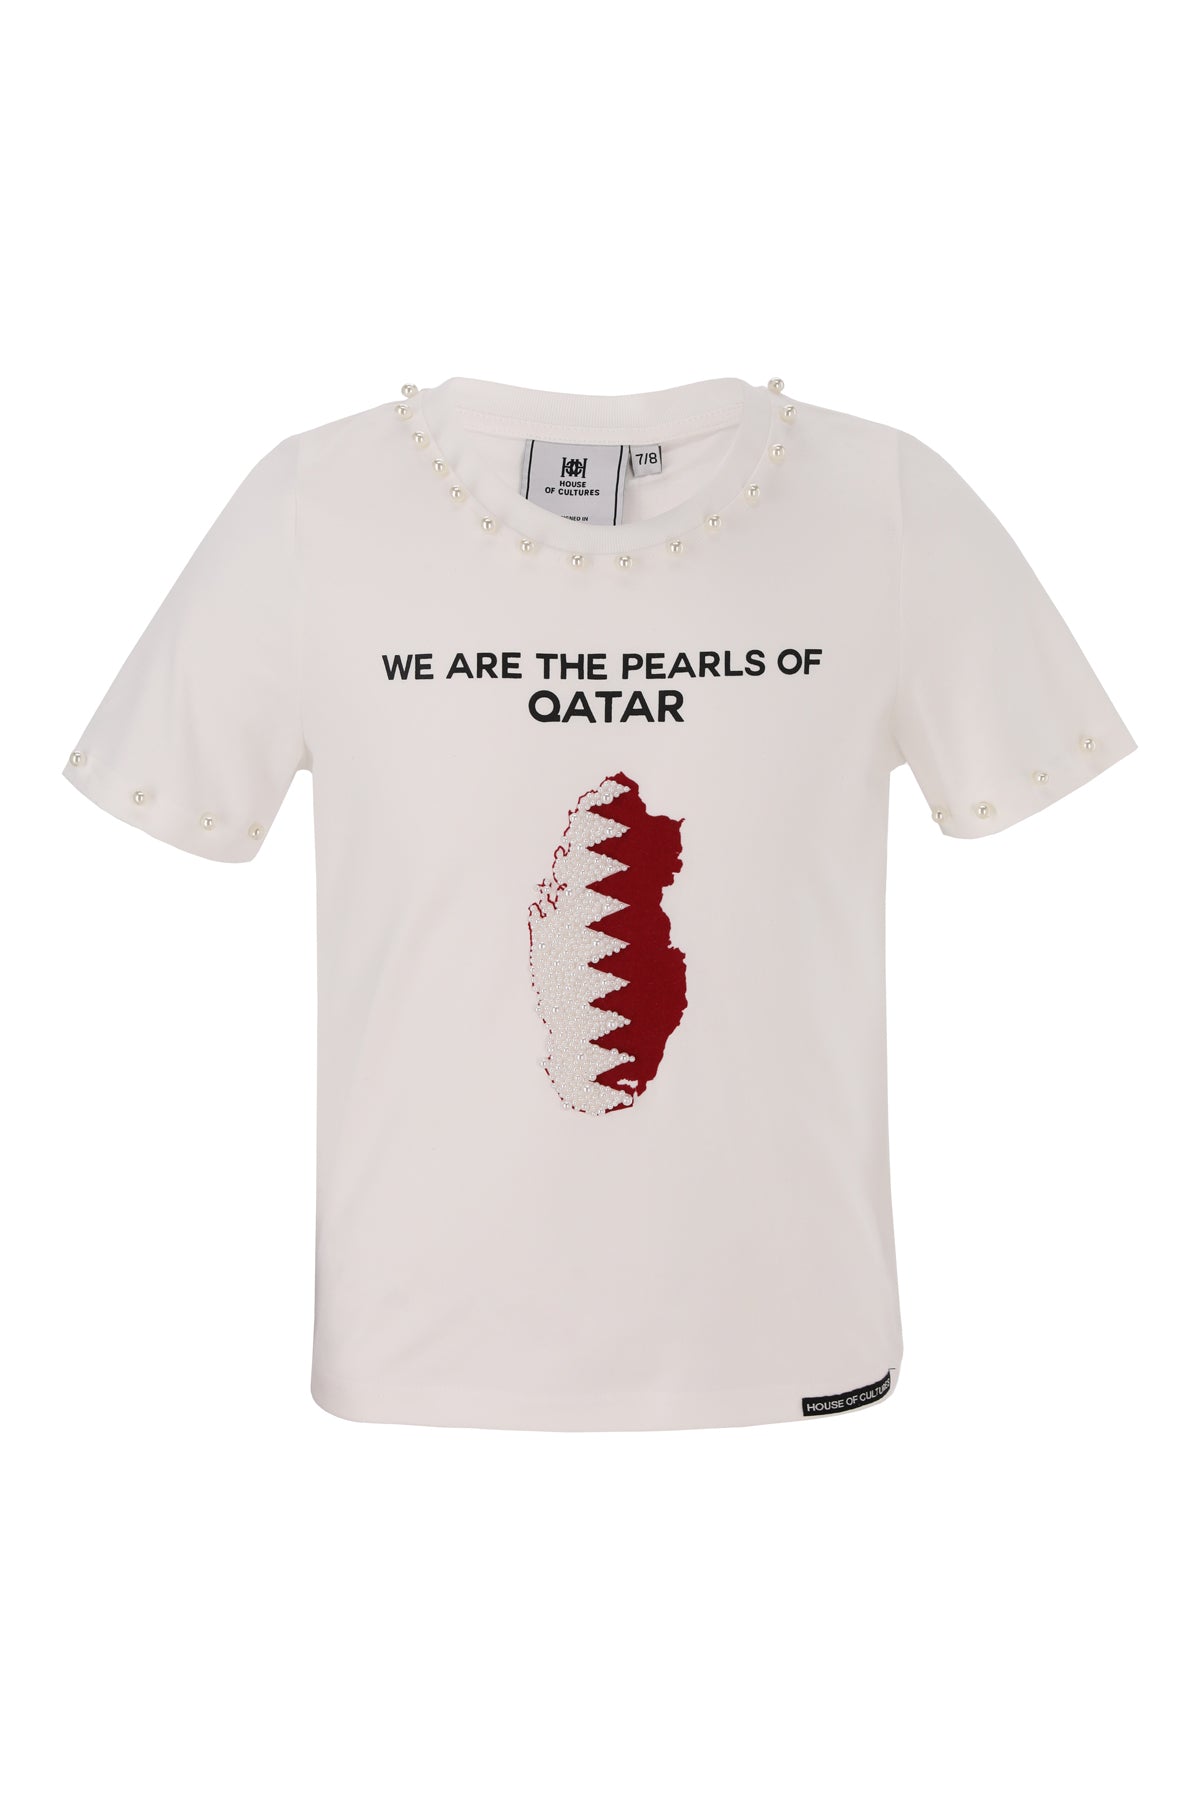 The pearls of Qatar